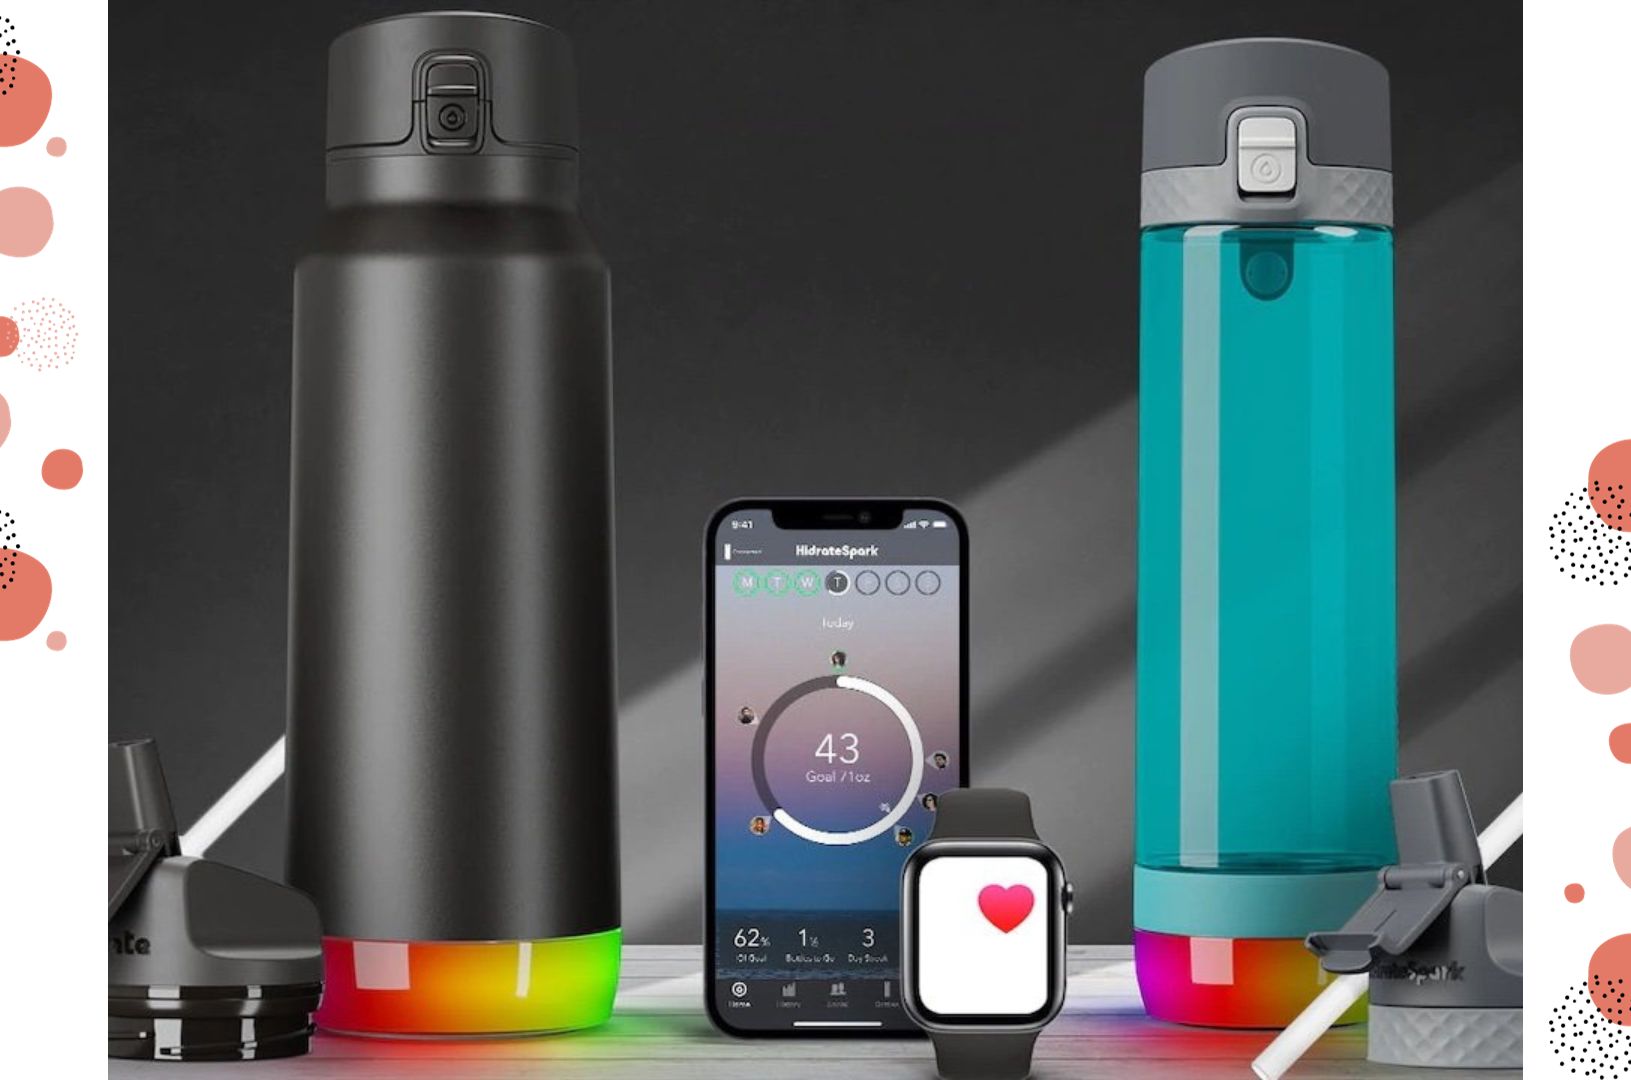 Smart Water Bottles